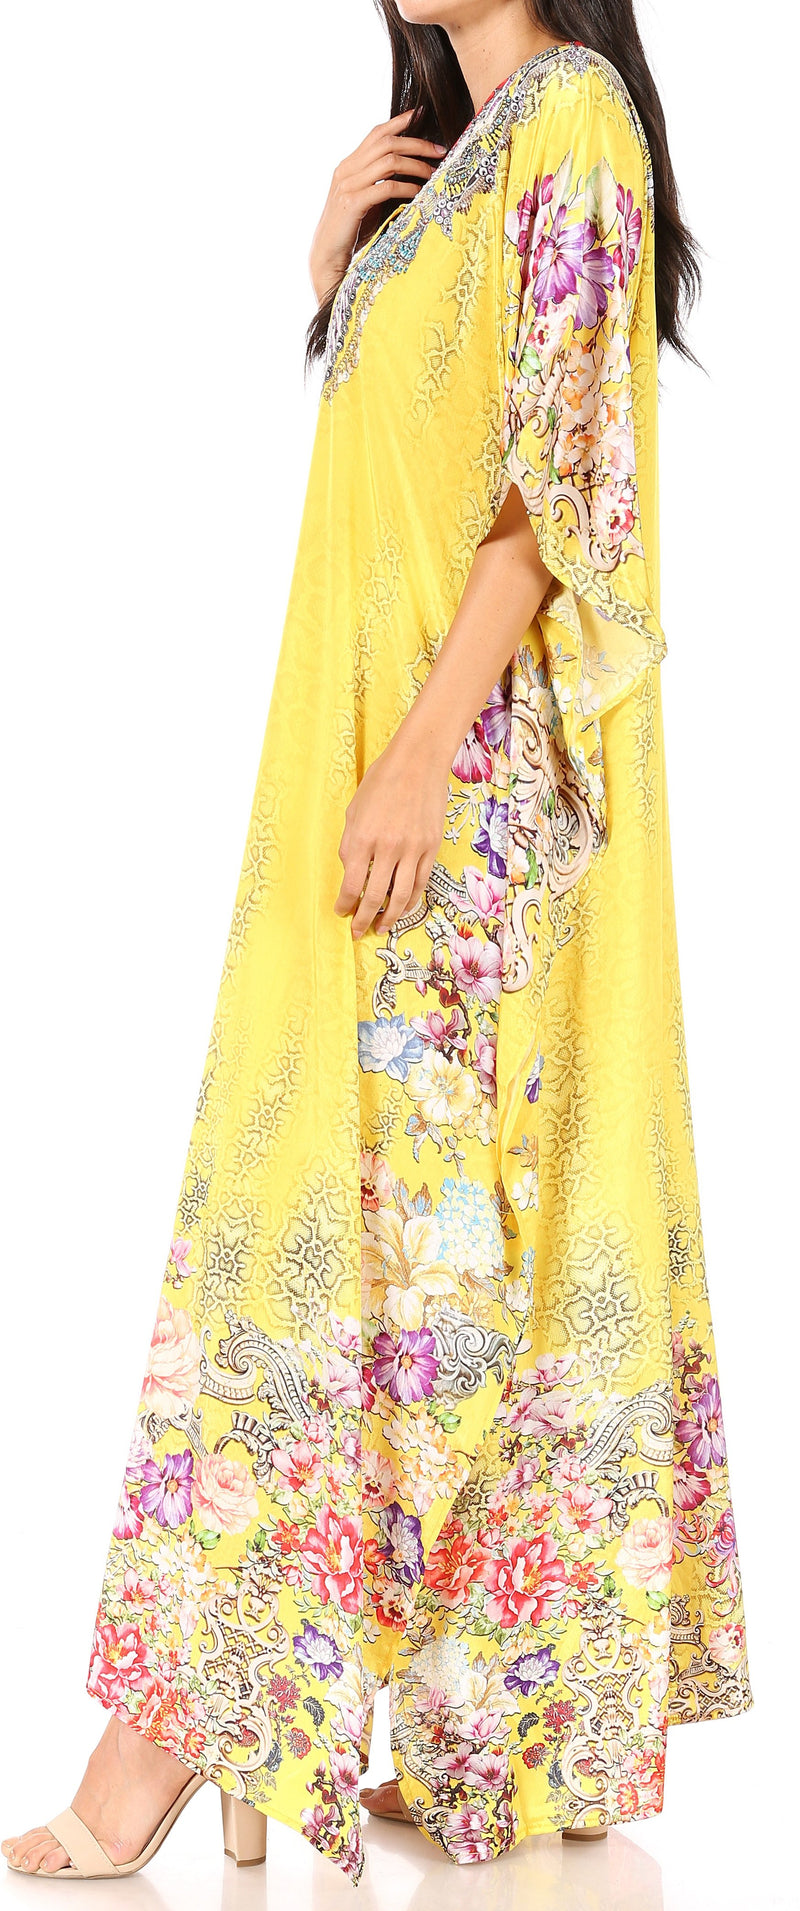 Sakkas Yeni Women's Short Sleeve V-neck Summer Floral Long Caftan Dress Cover-up